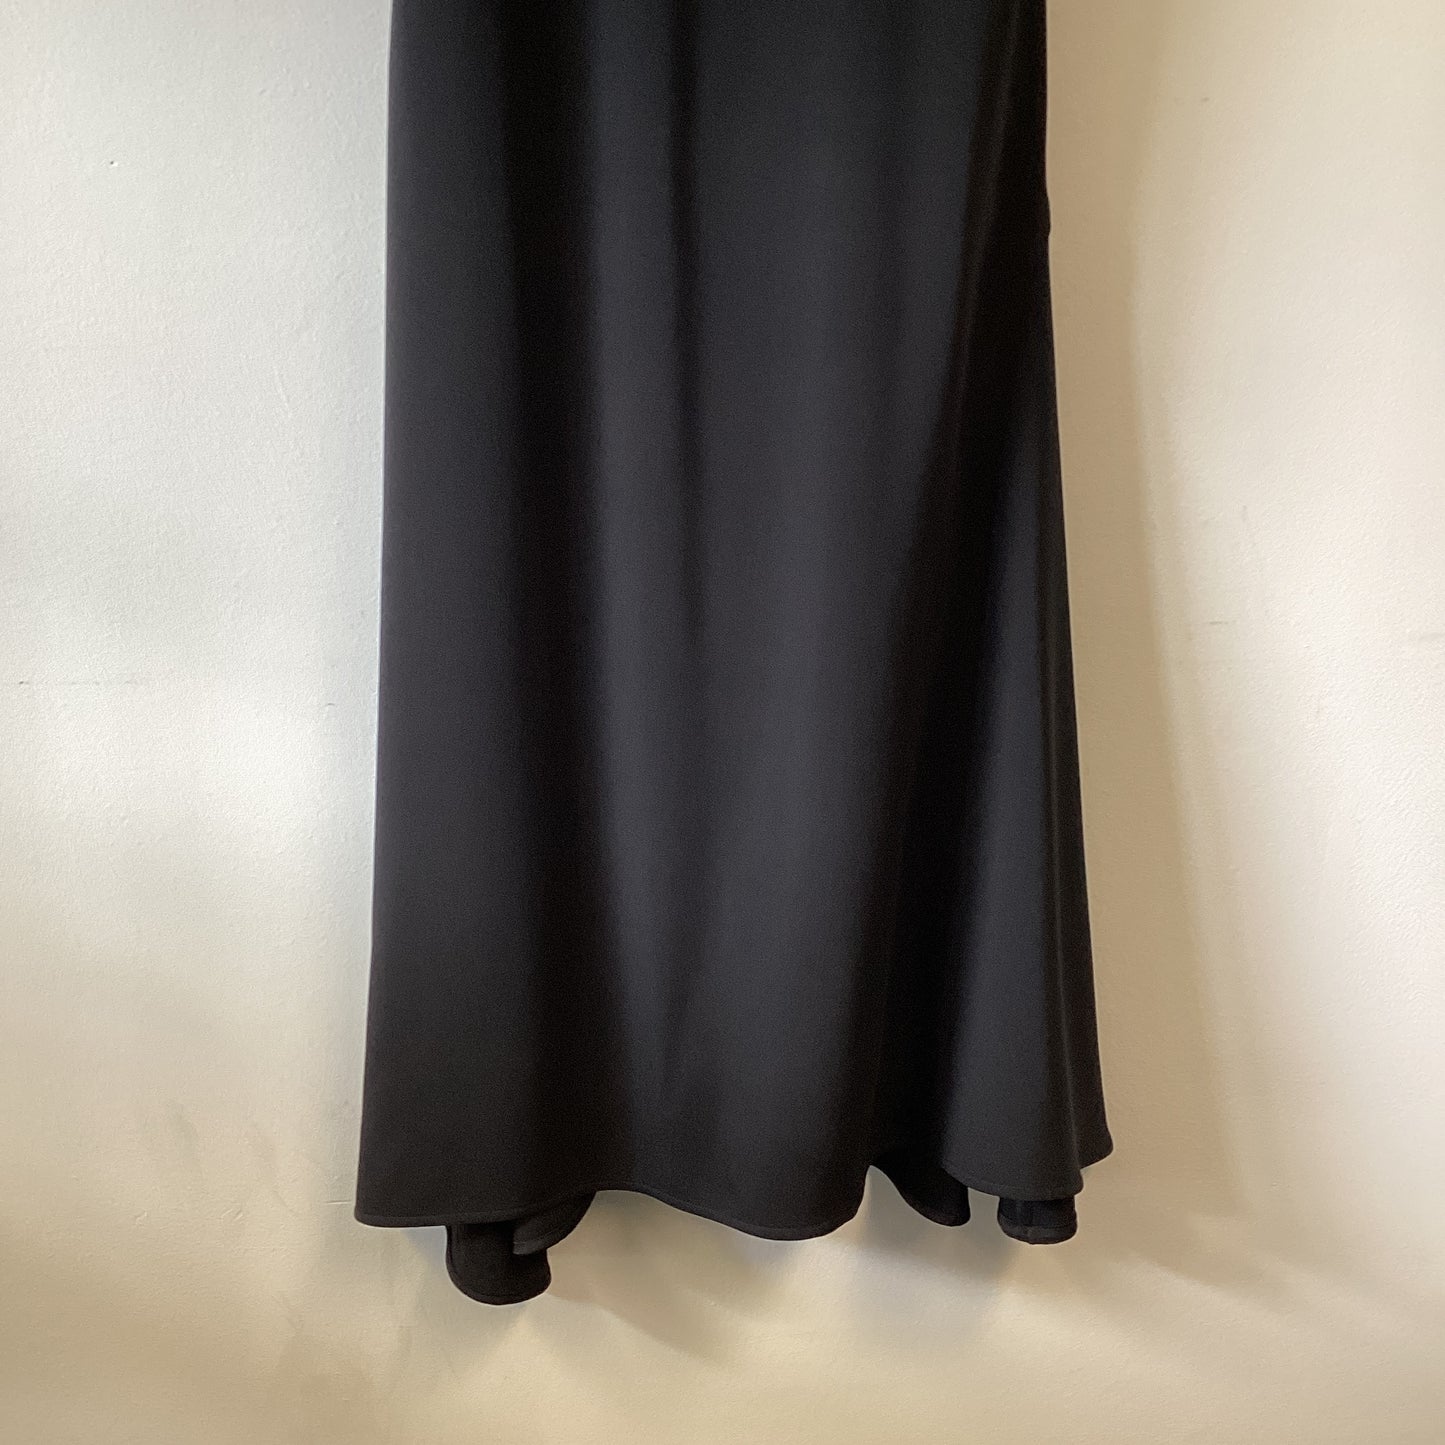 NEW JIL SANDER BLACK DRESS SIZE